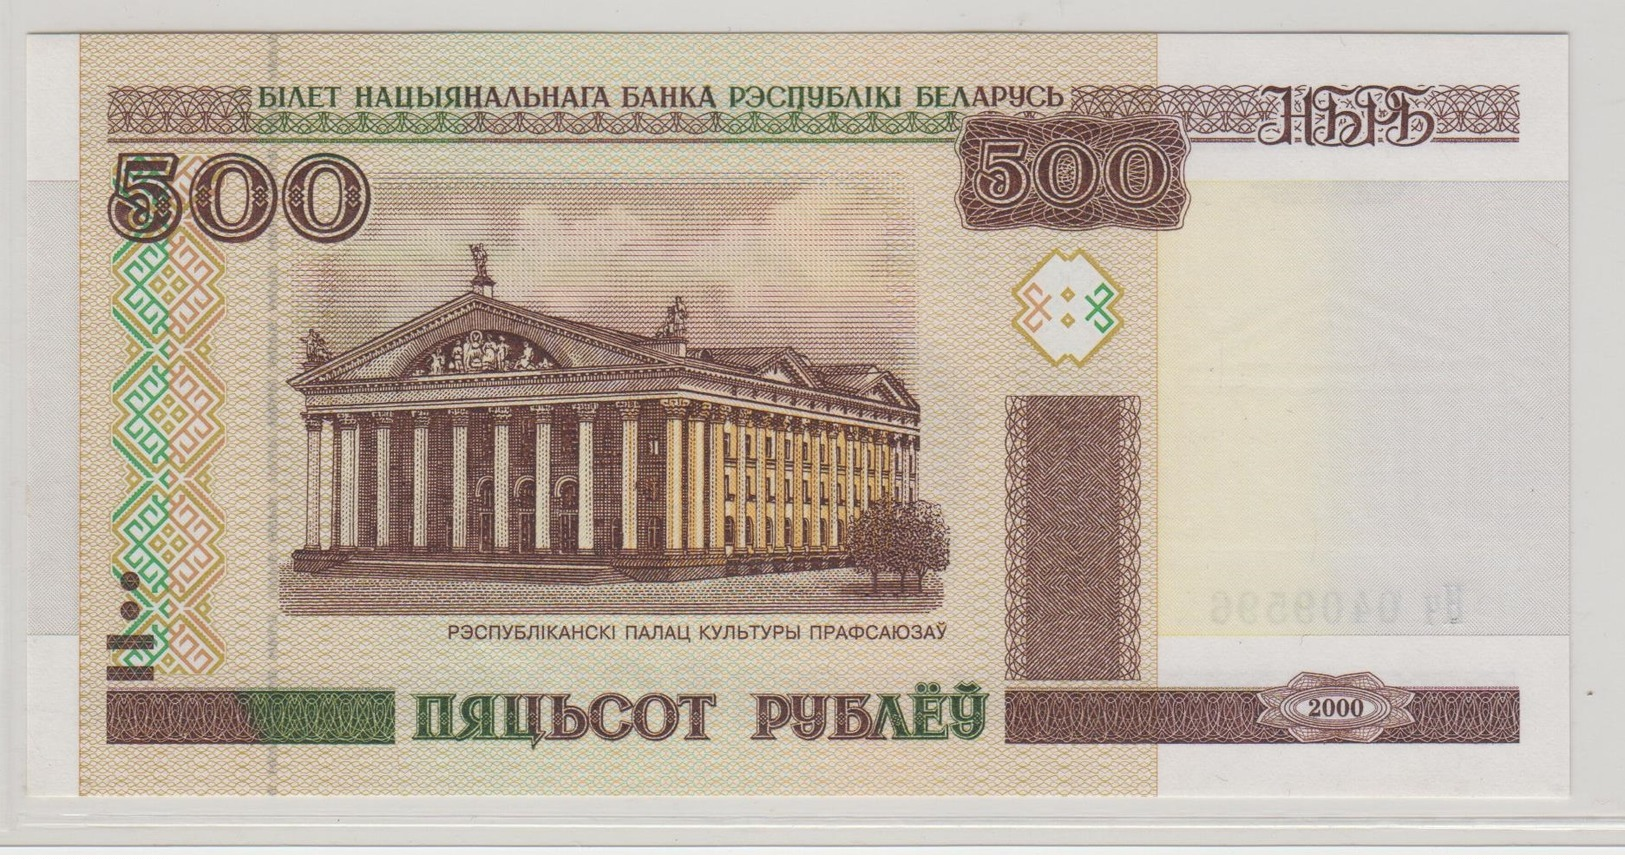 BELARUS 500 Roubles 2000 P27 UNC - Belarus